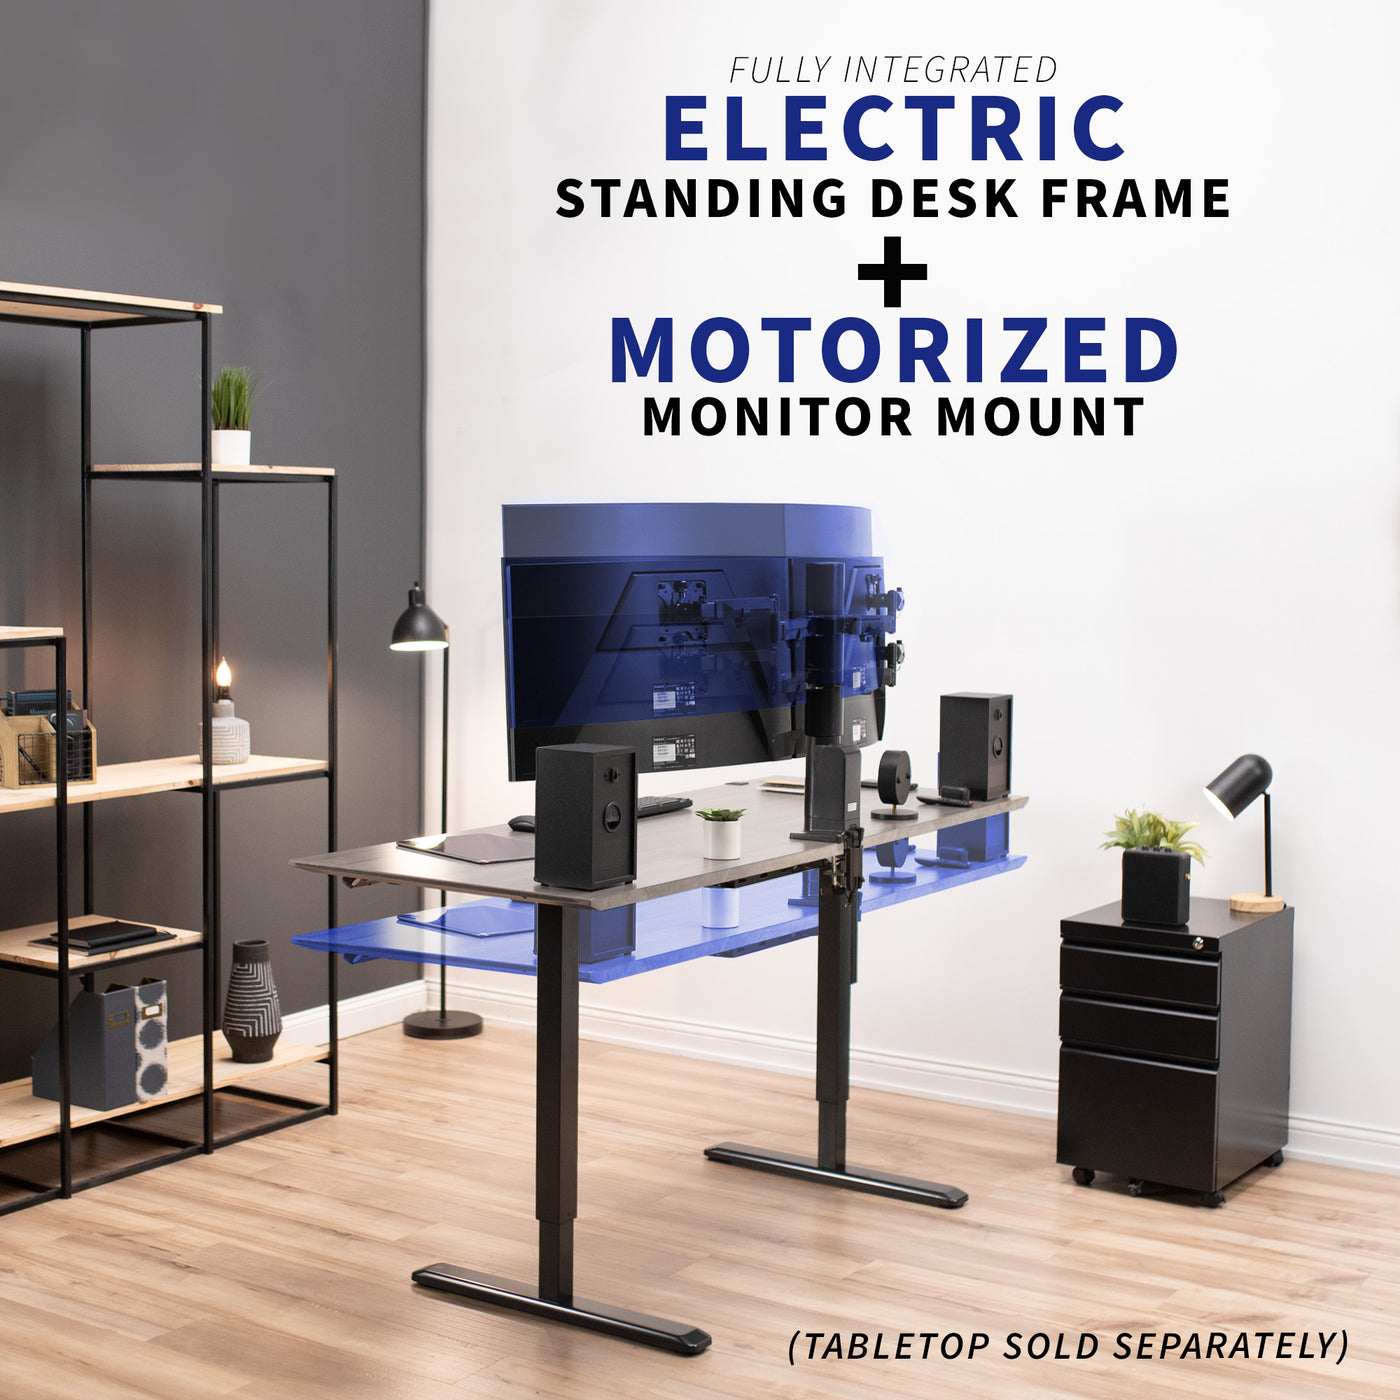 Motorised desk frame and motorized monitor mount for the ultimate monitor setup.